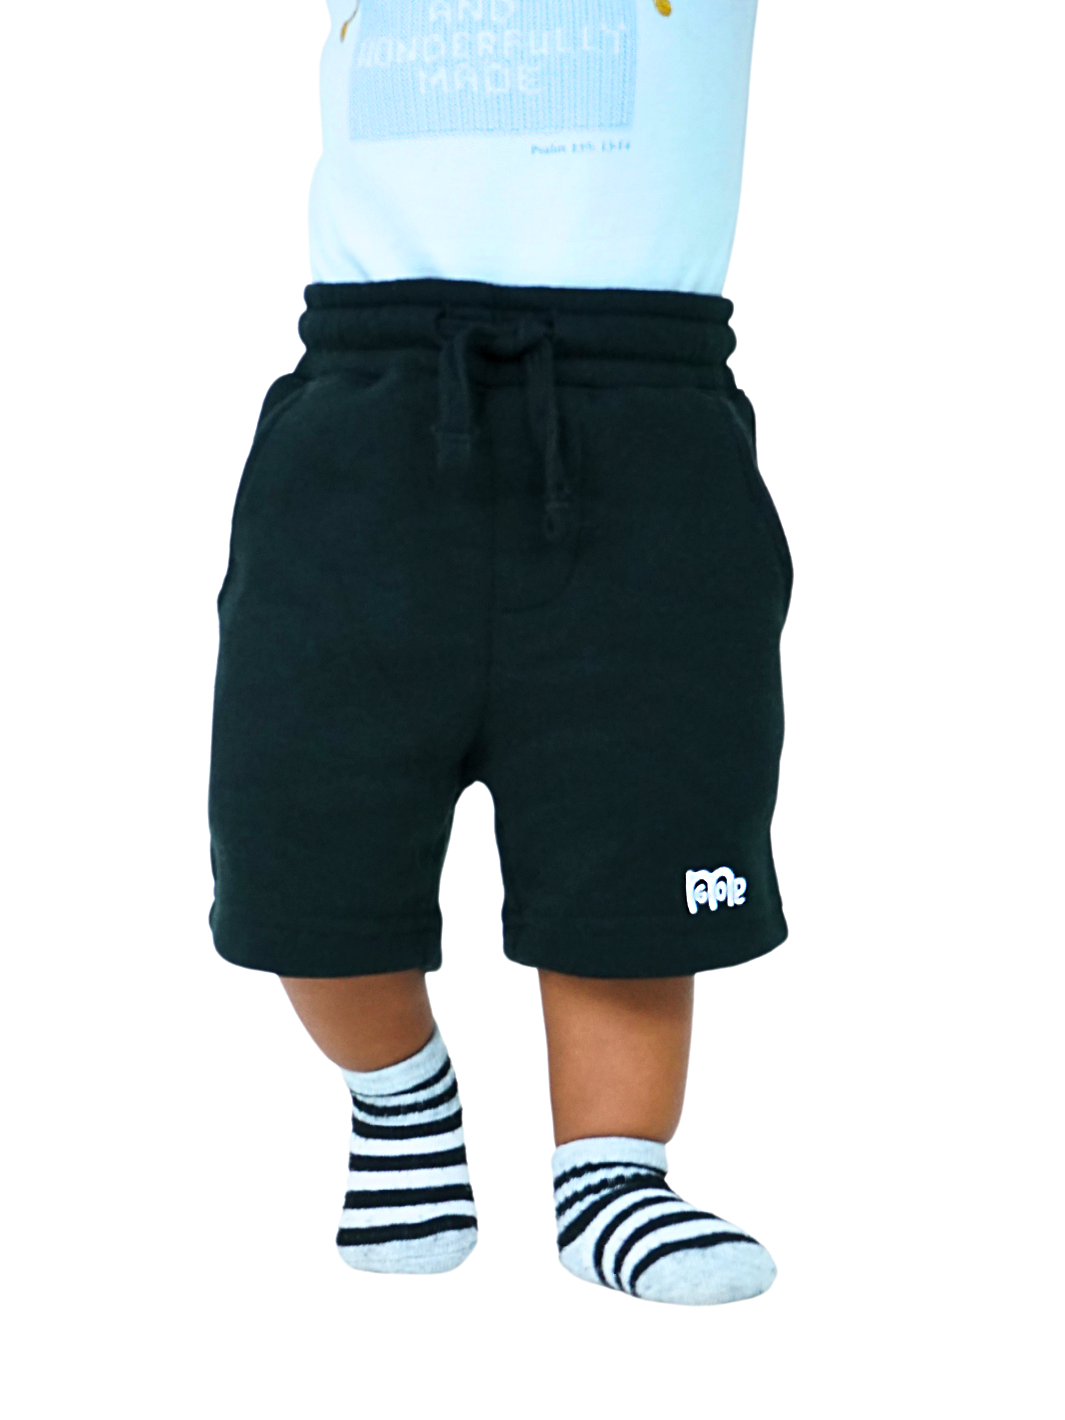 Toddler size Black Shorts with elastic waistband, sewn fly detail, jersey-lined front pockets, stylish back pocket, and White GODinme logo.